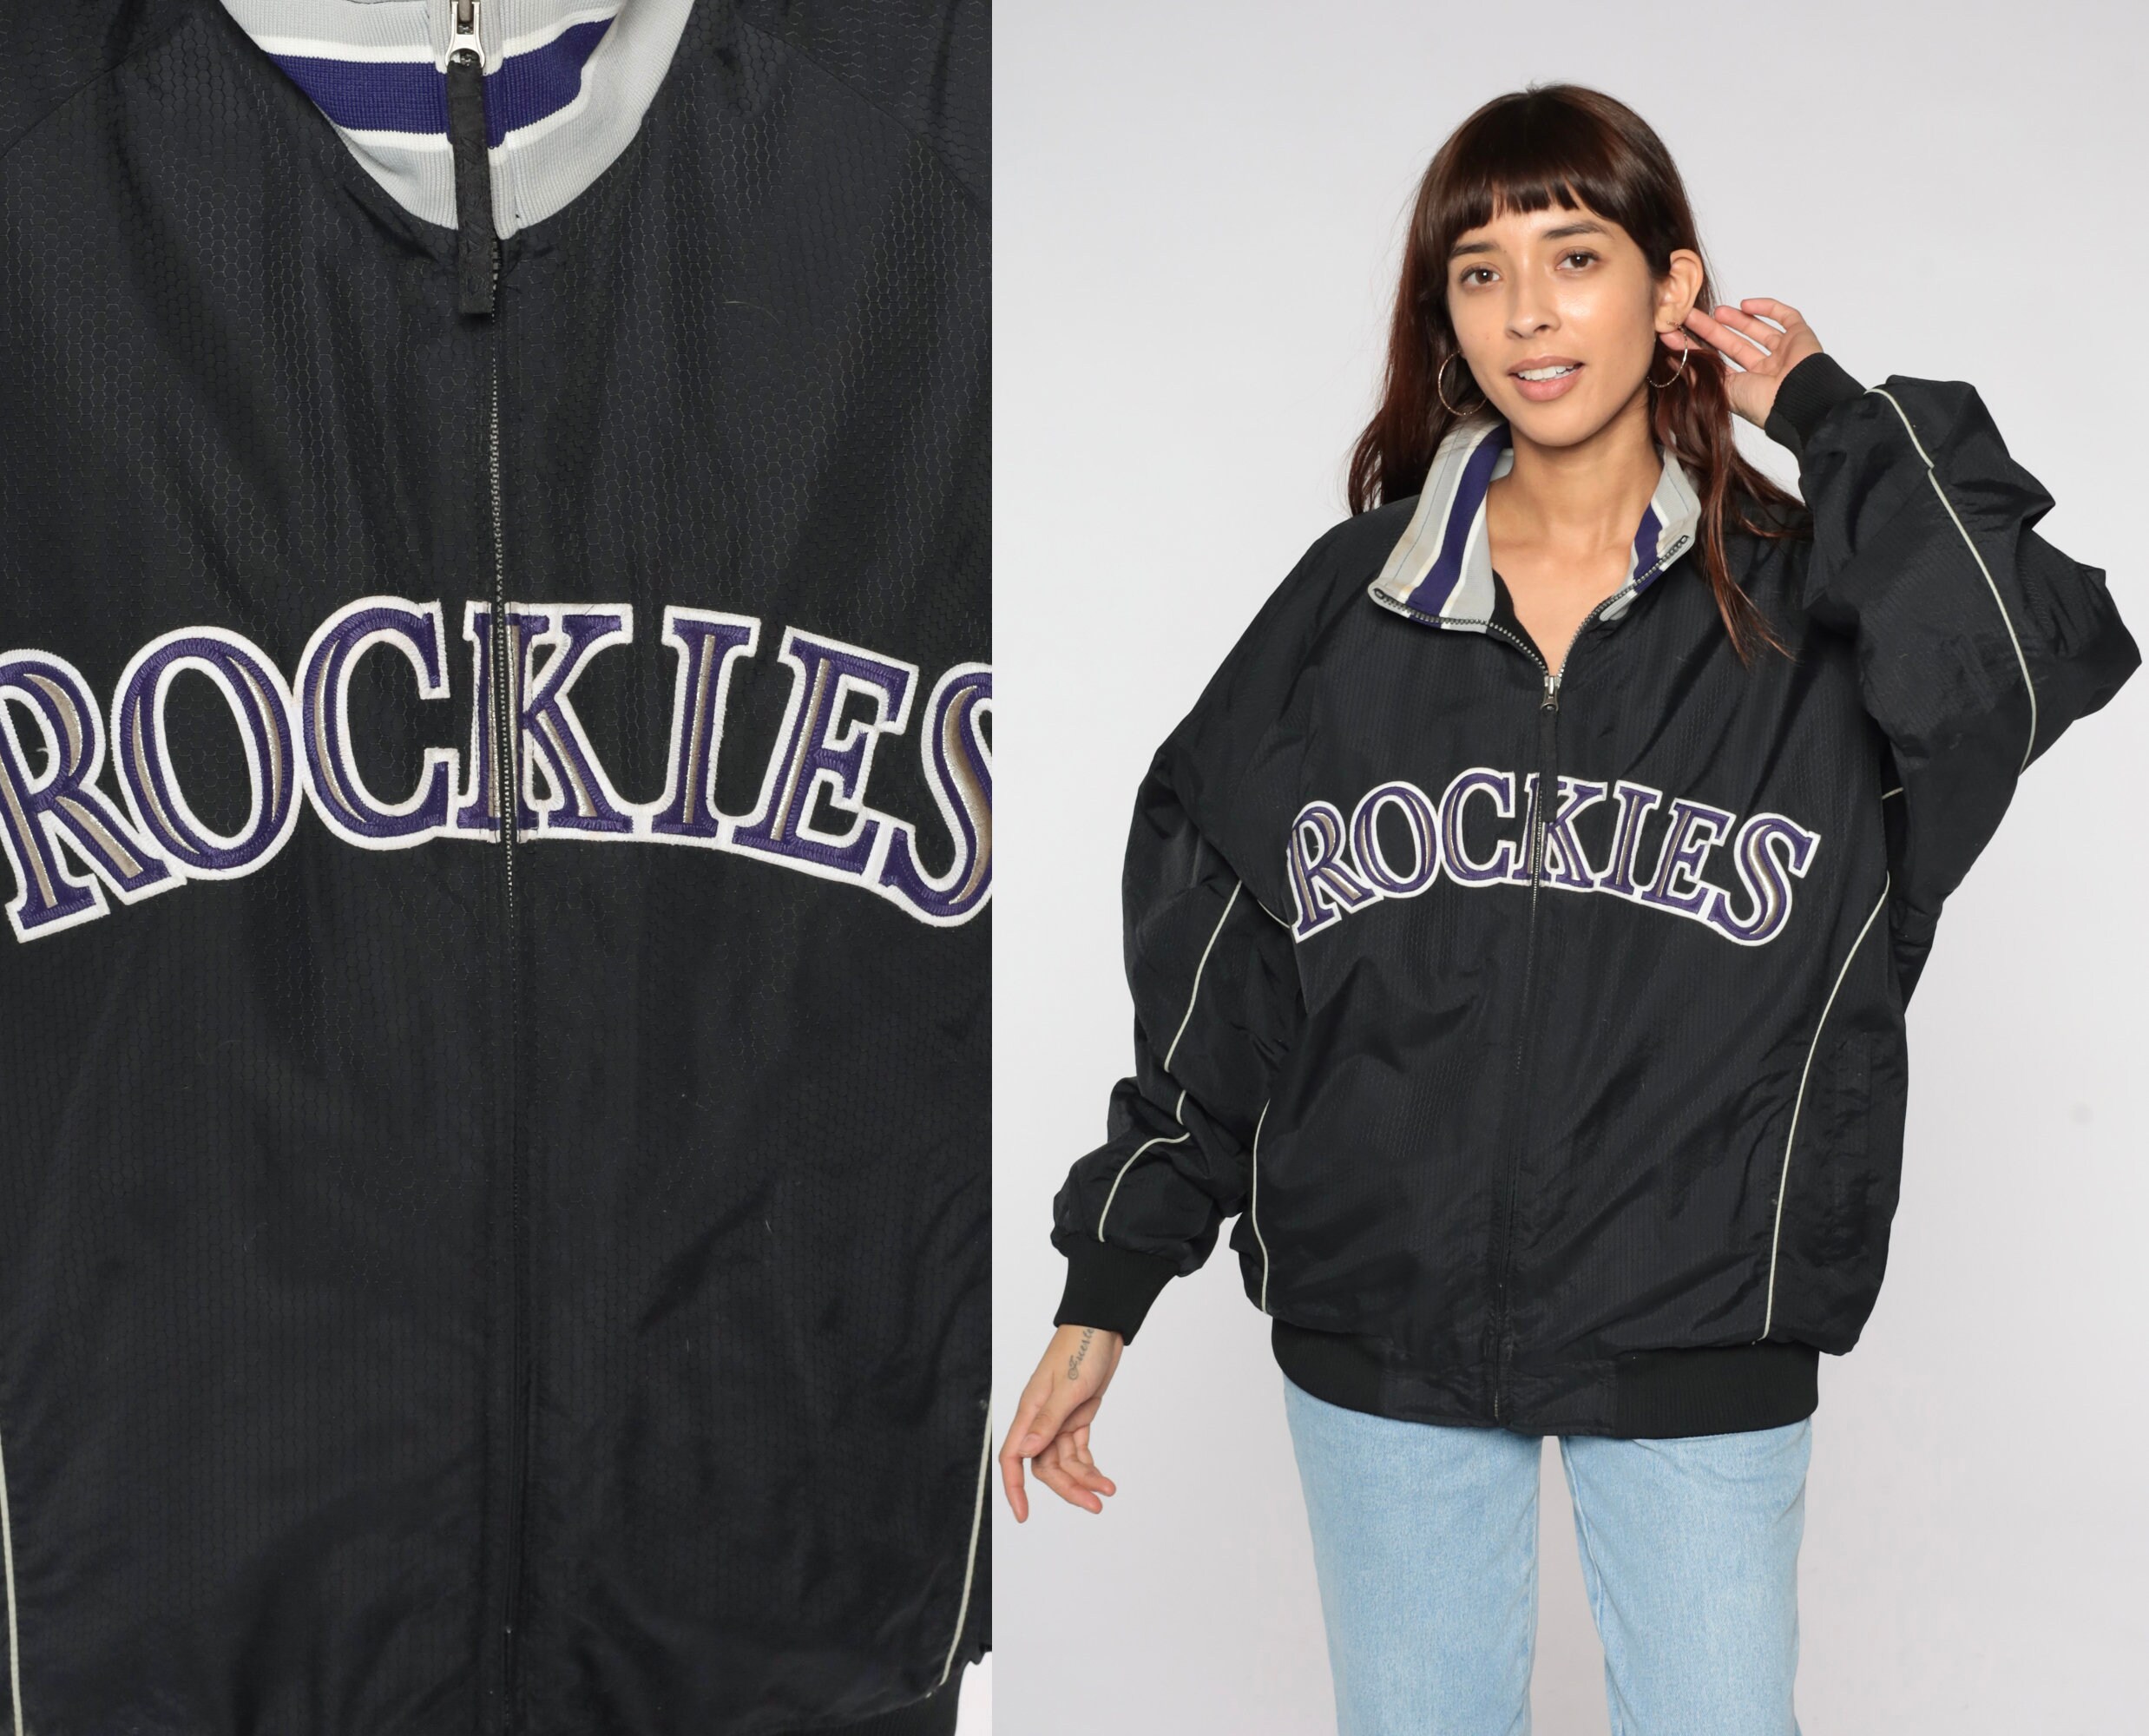 Vintage 90s Starter Jacket Colorado ROCKIES Mlb Baseball -  Israel